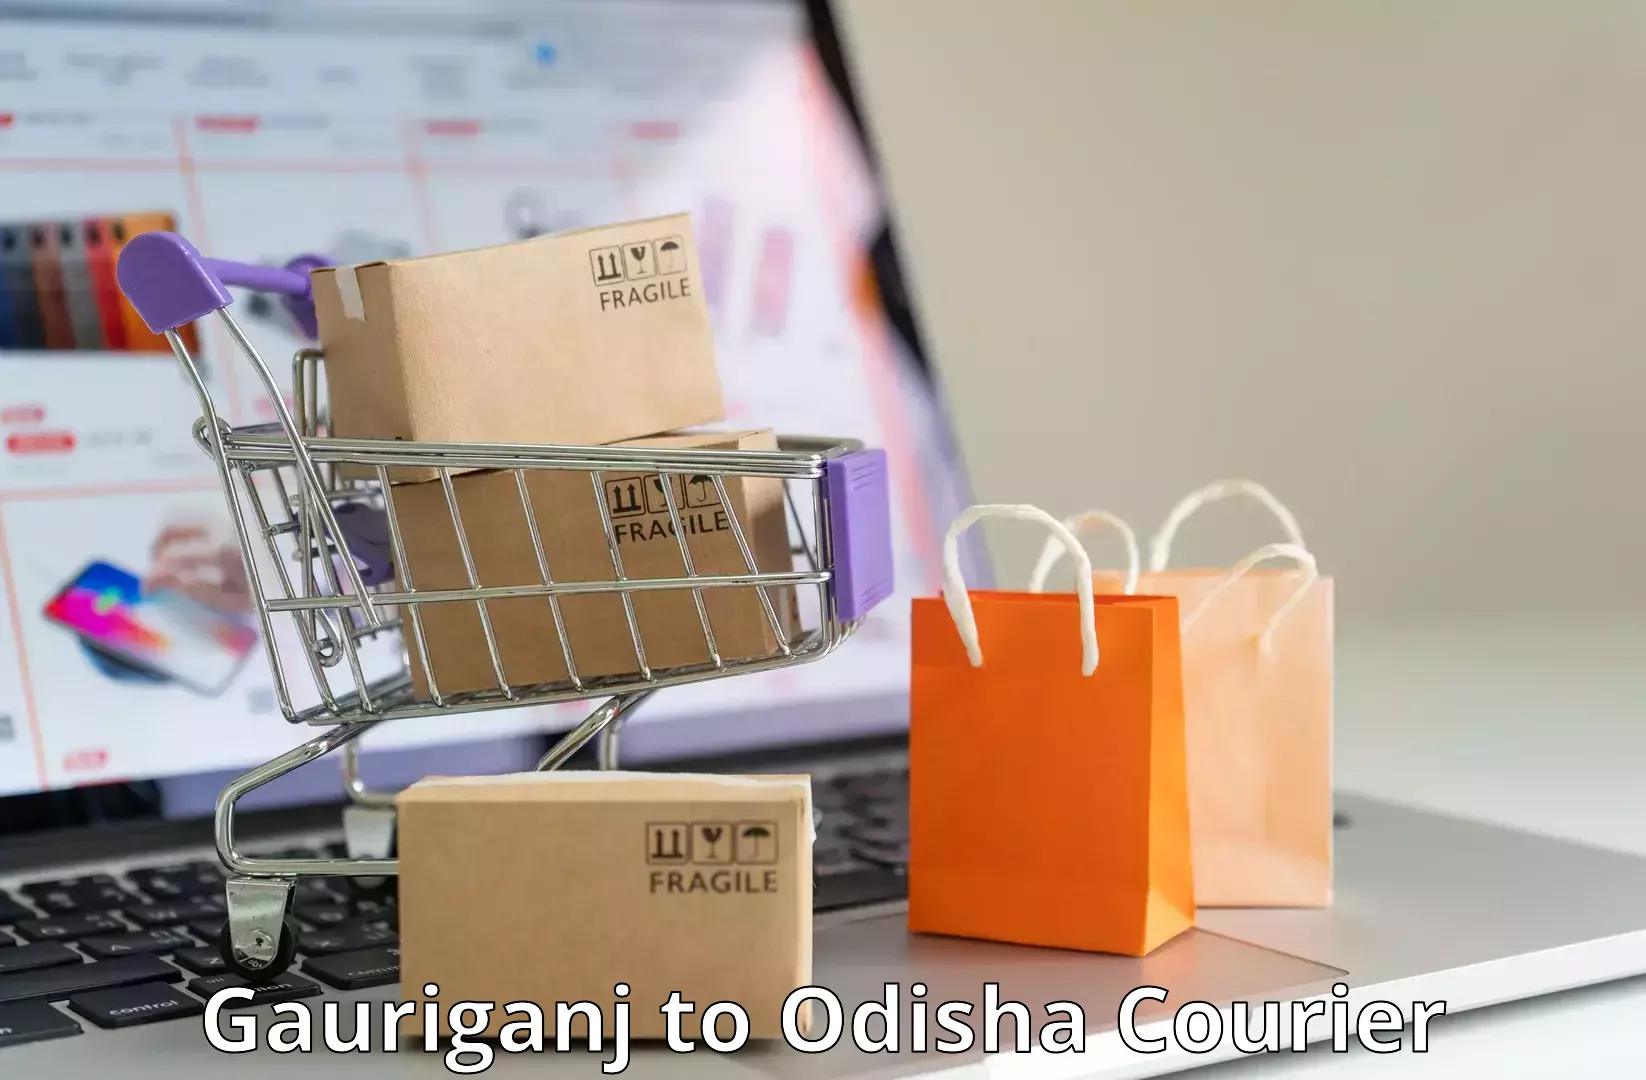 User-friendly courier app Gauriganj to Odisha